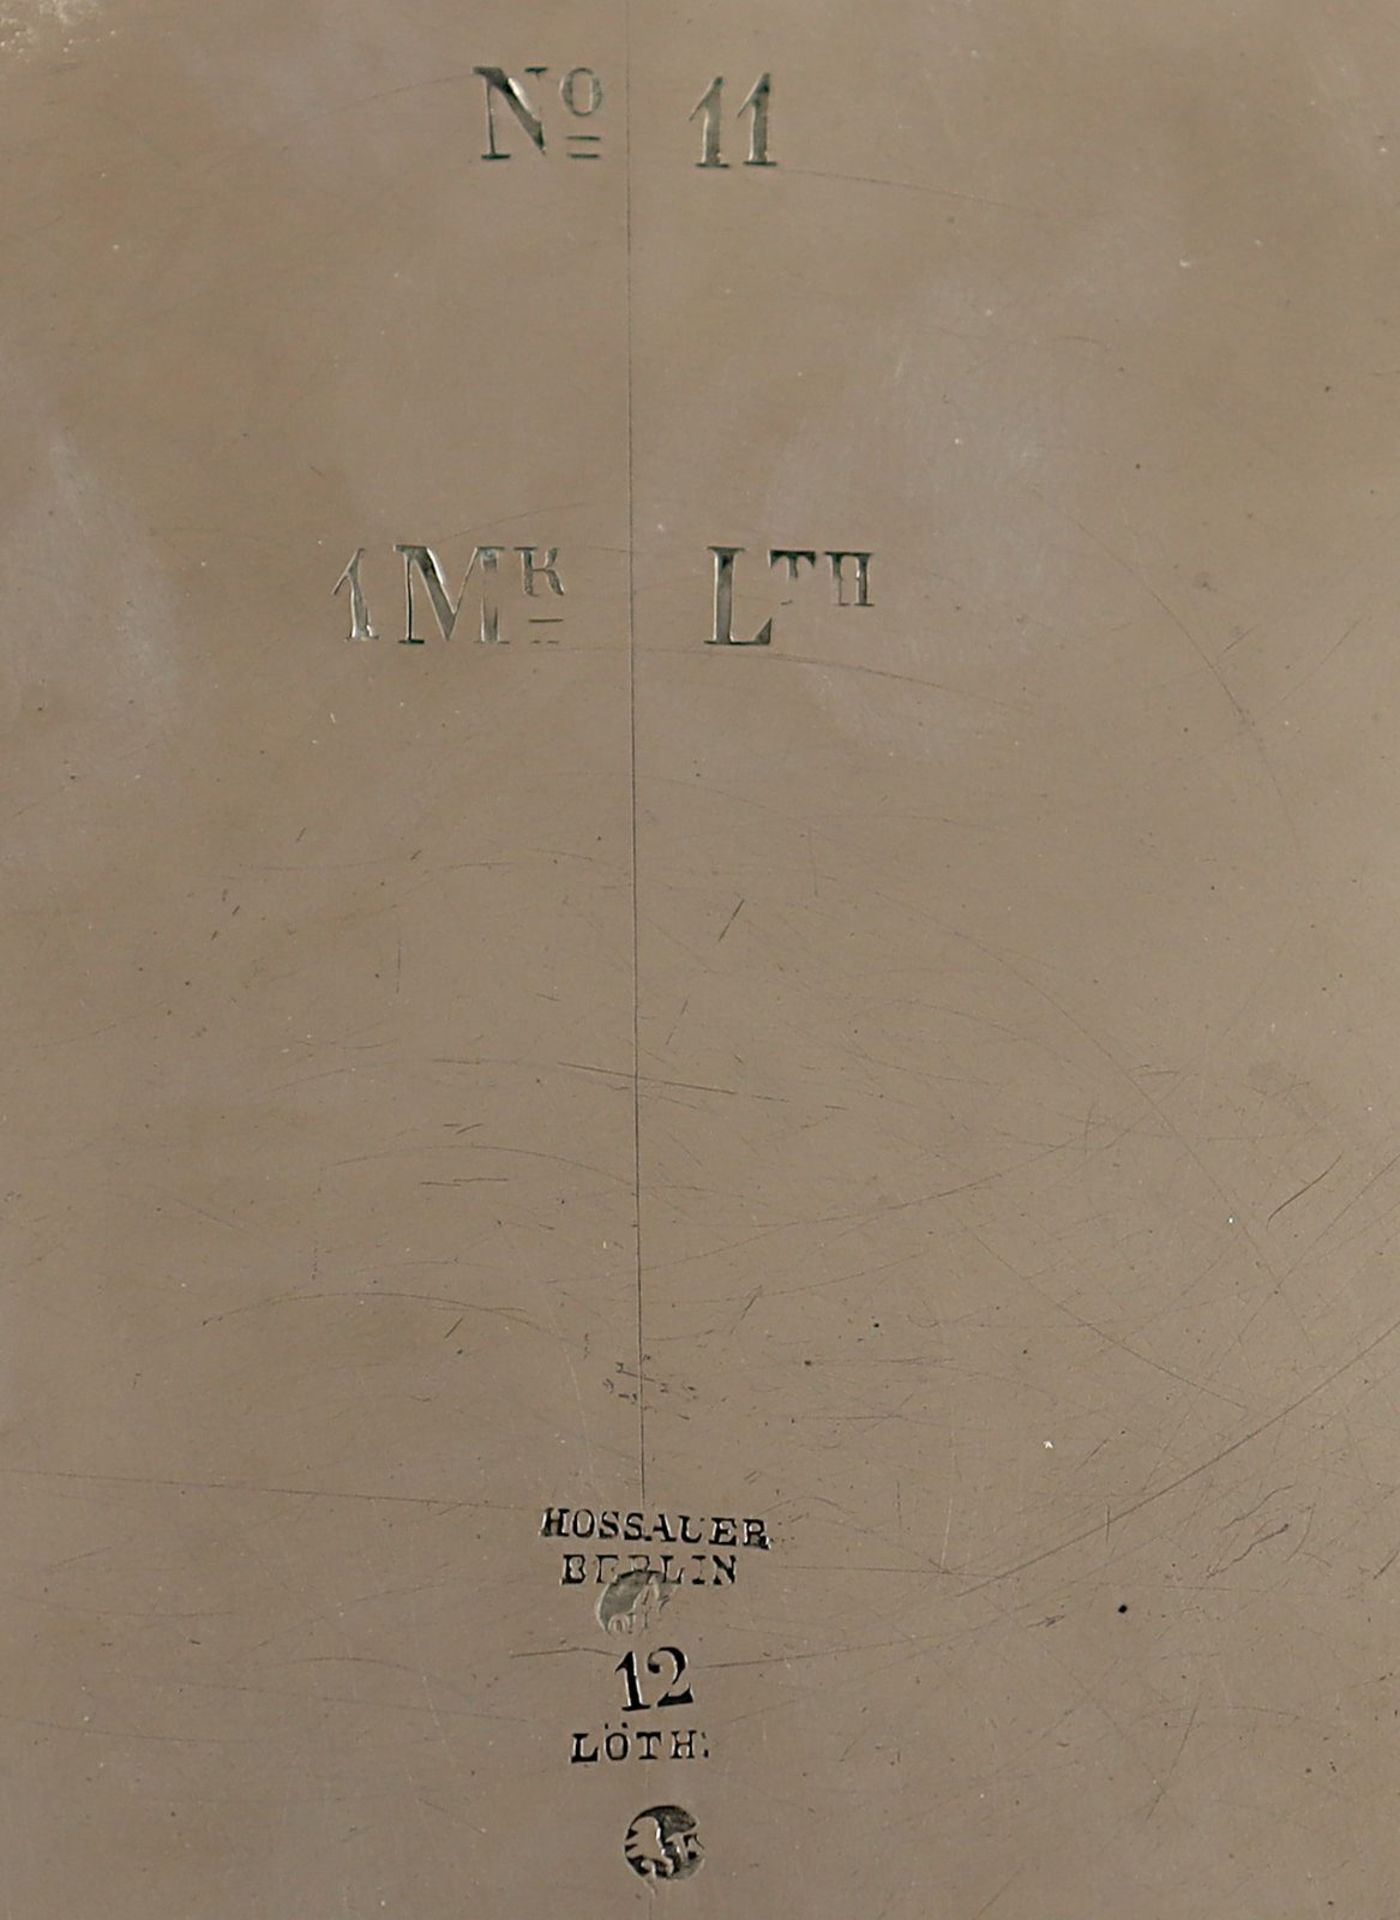 SATZ DREI BERLINER TELLER, 12lötig, HOSSAUER, BERLIN, um 1840 - Bild 3 aus 4